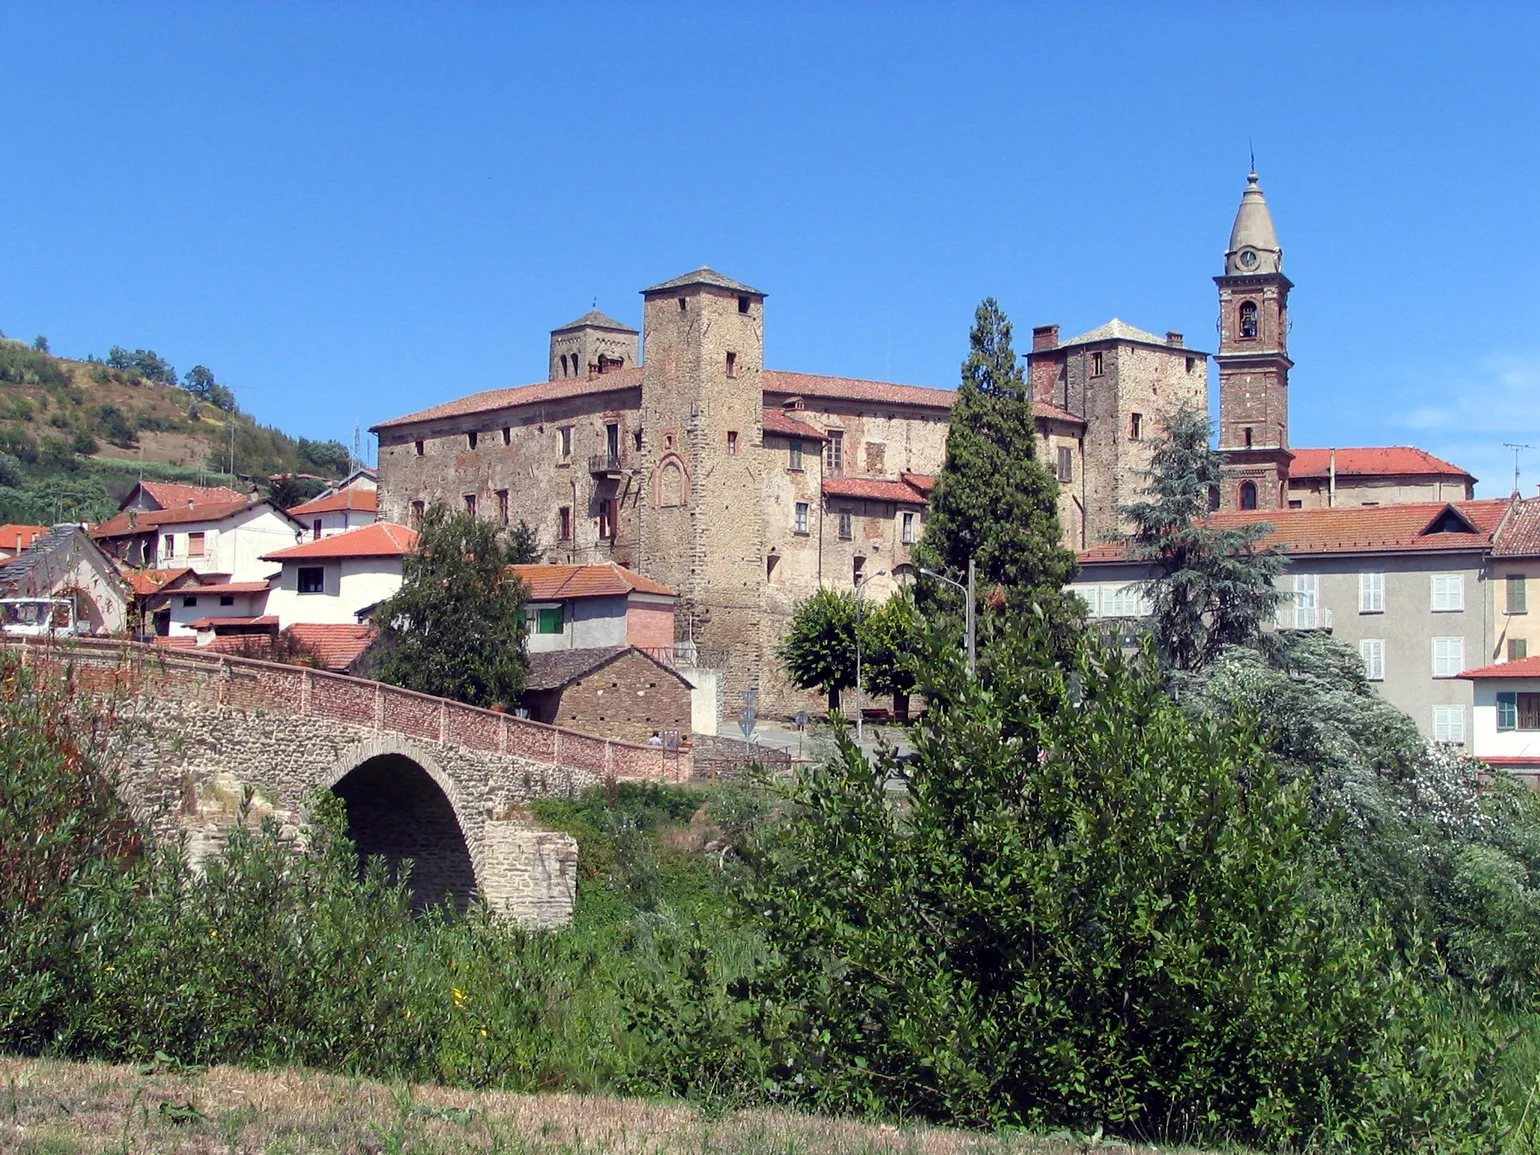 Photo showing: Monastero Bormida, a municipality in the Province of Asti, Liguria, Italy.